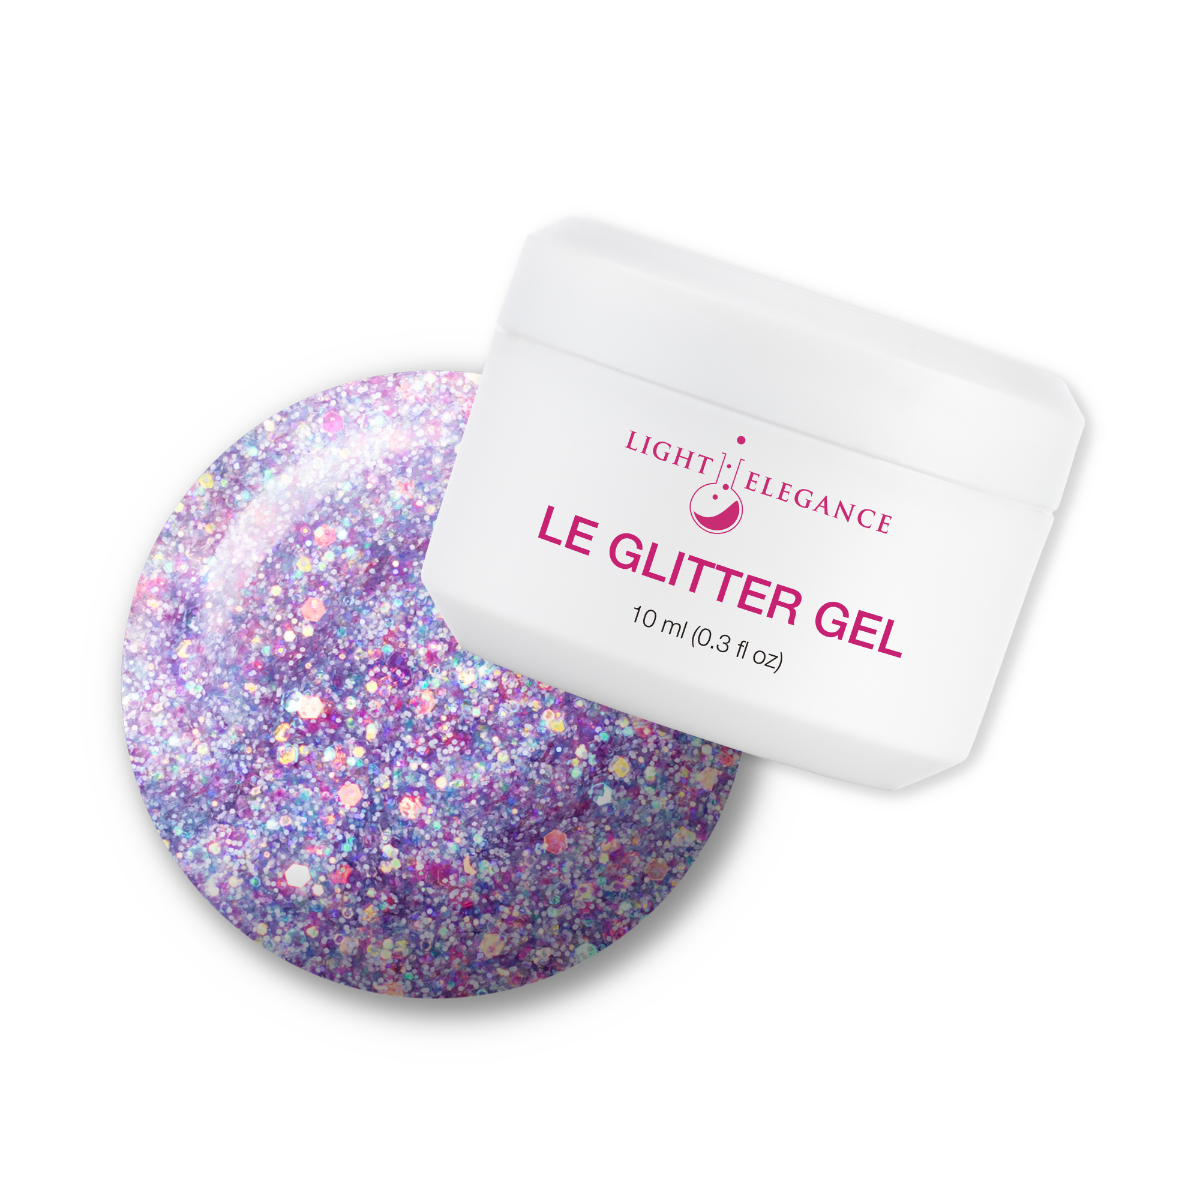 Light Elegance Glitter Gel - In My Happy Place :: New Packaging